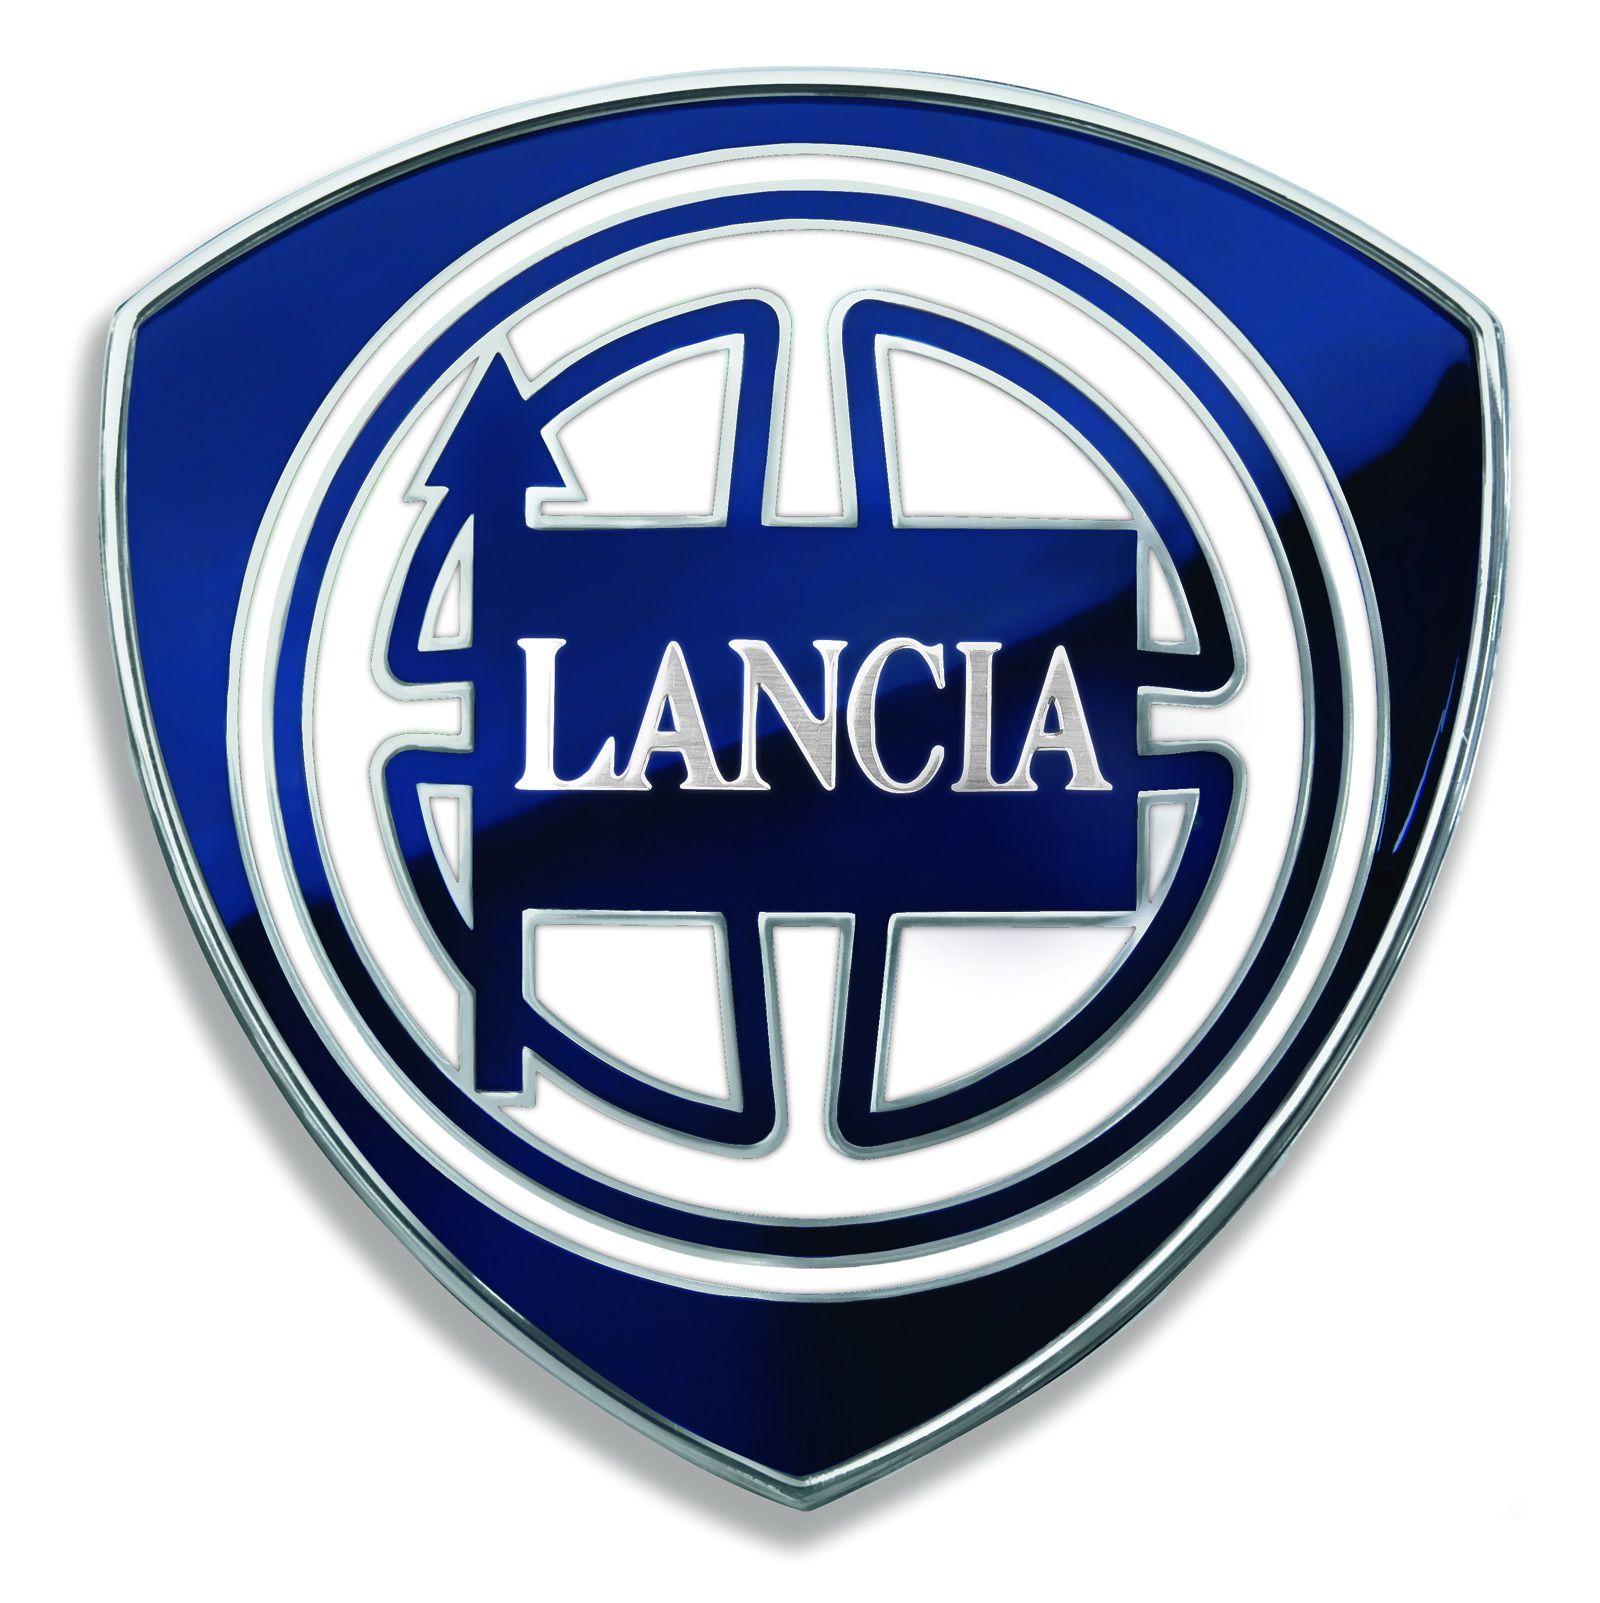 Lancia Logo - Lancia Logo, Lancia Car Symbol Meaning and History | Car Brand Names.com